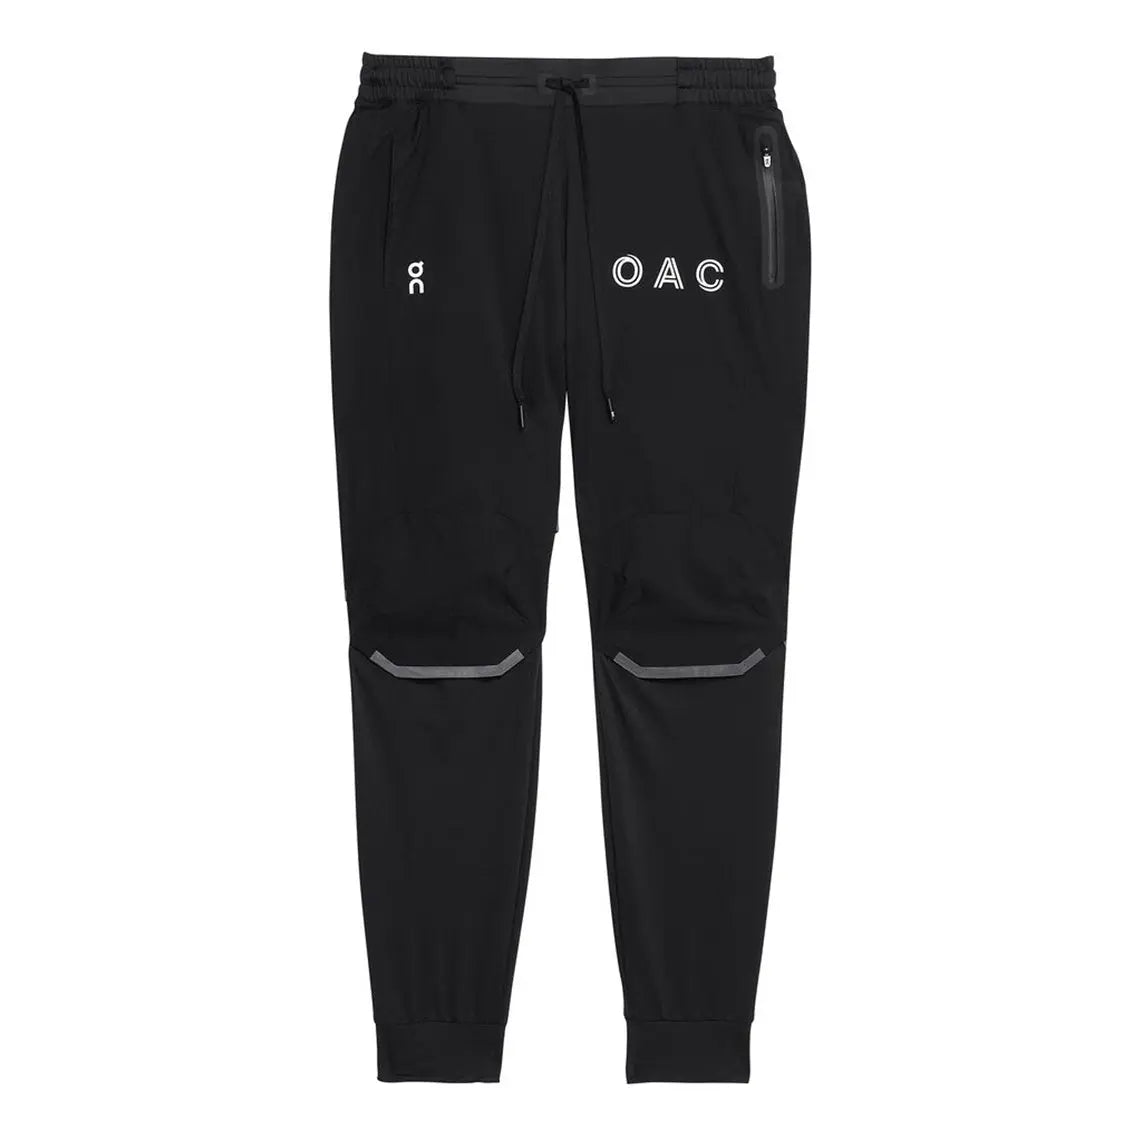 Womens On Running OAC Running Pants - Black